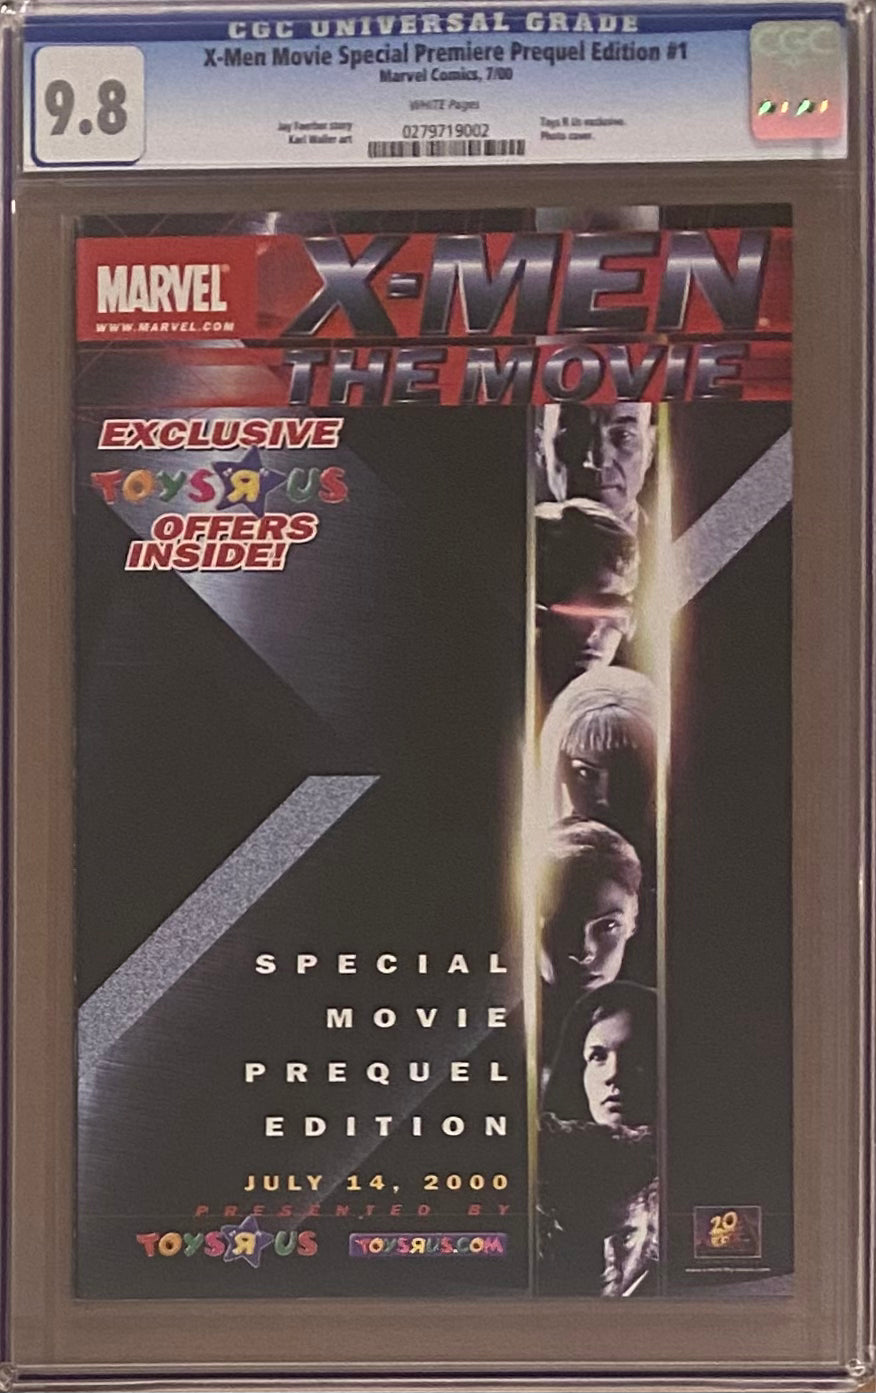 X-Men Movie Special Premiere Prequel Edition #1 CGC 9.8